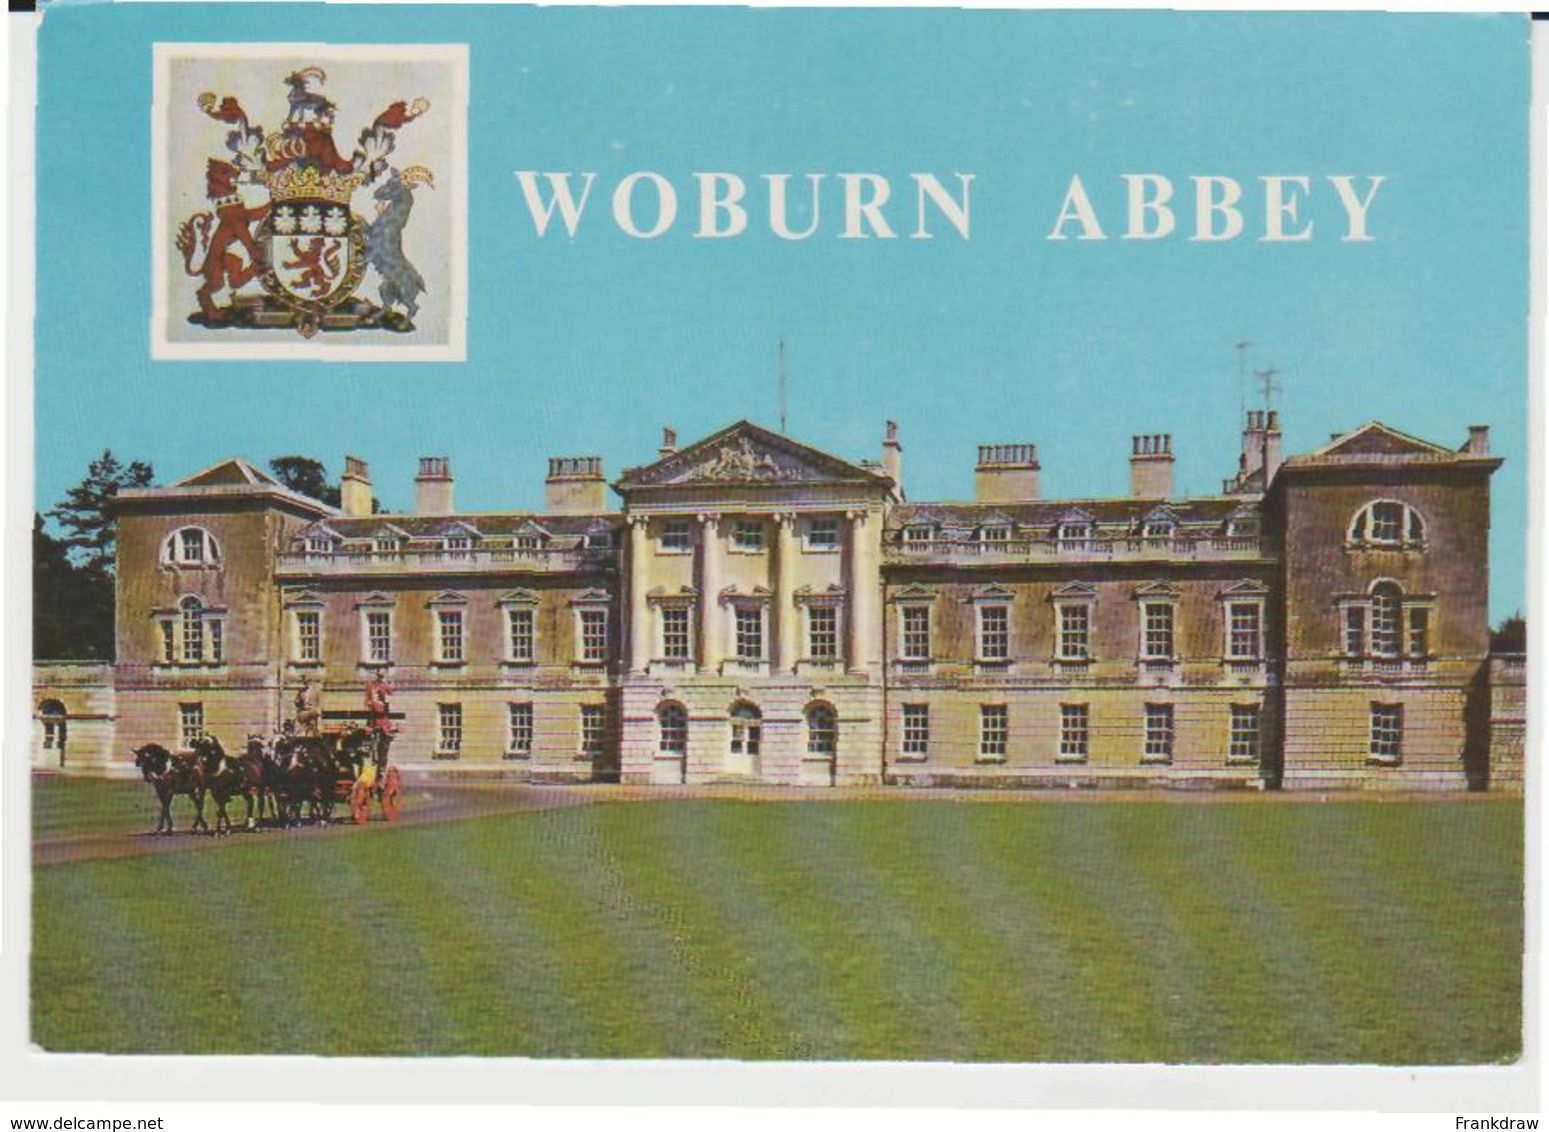 Postcard - Woburn Abbey - Card No. Wob110 - Unused Very Good - Unclassified